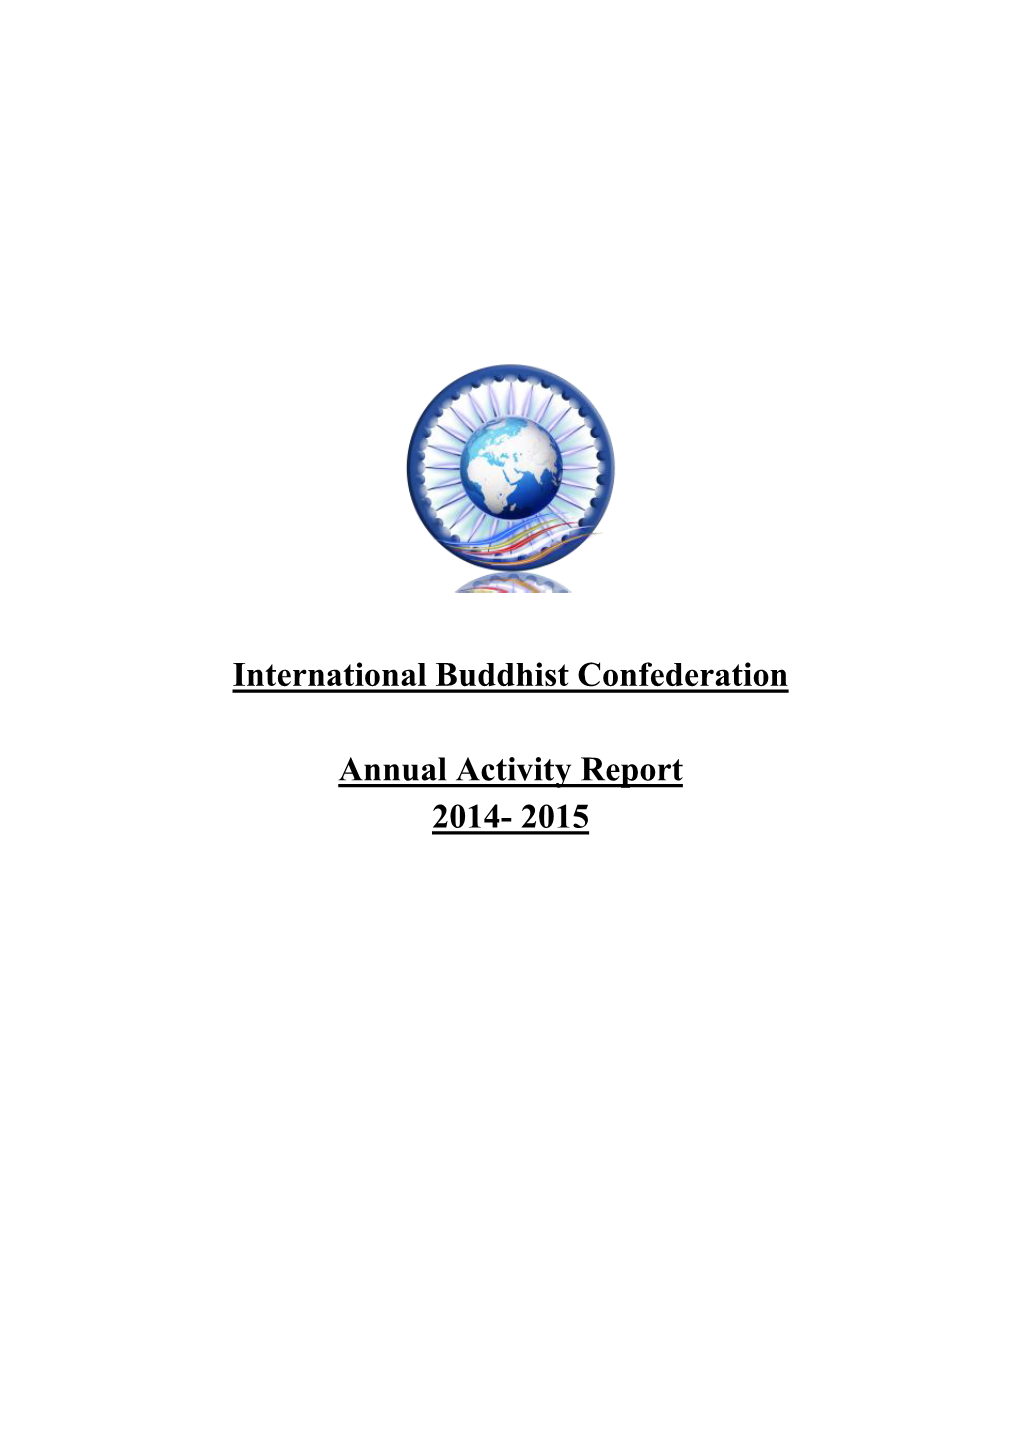 International Buddhist Confederation Annual Activity Report 2014- 2015